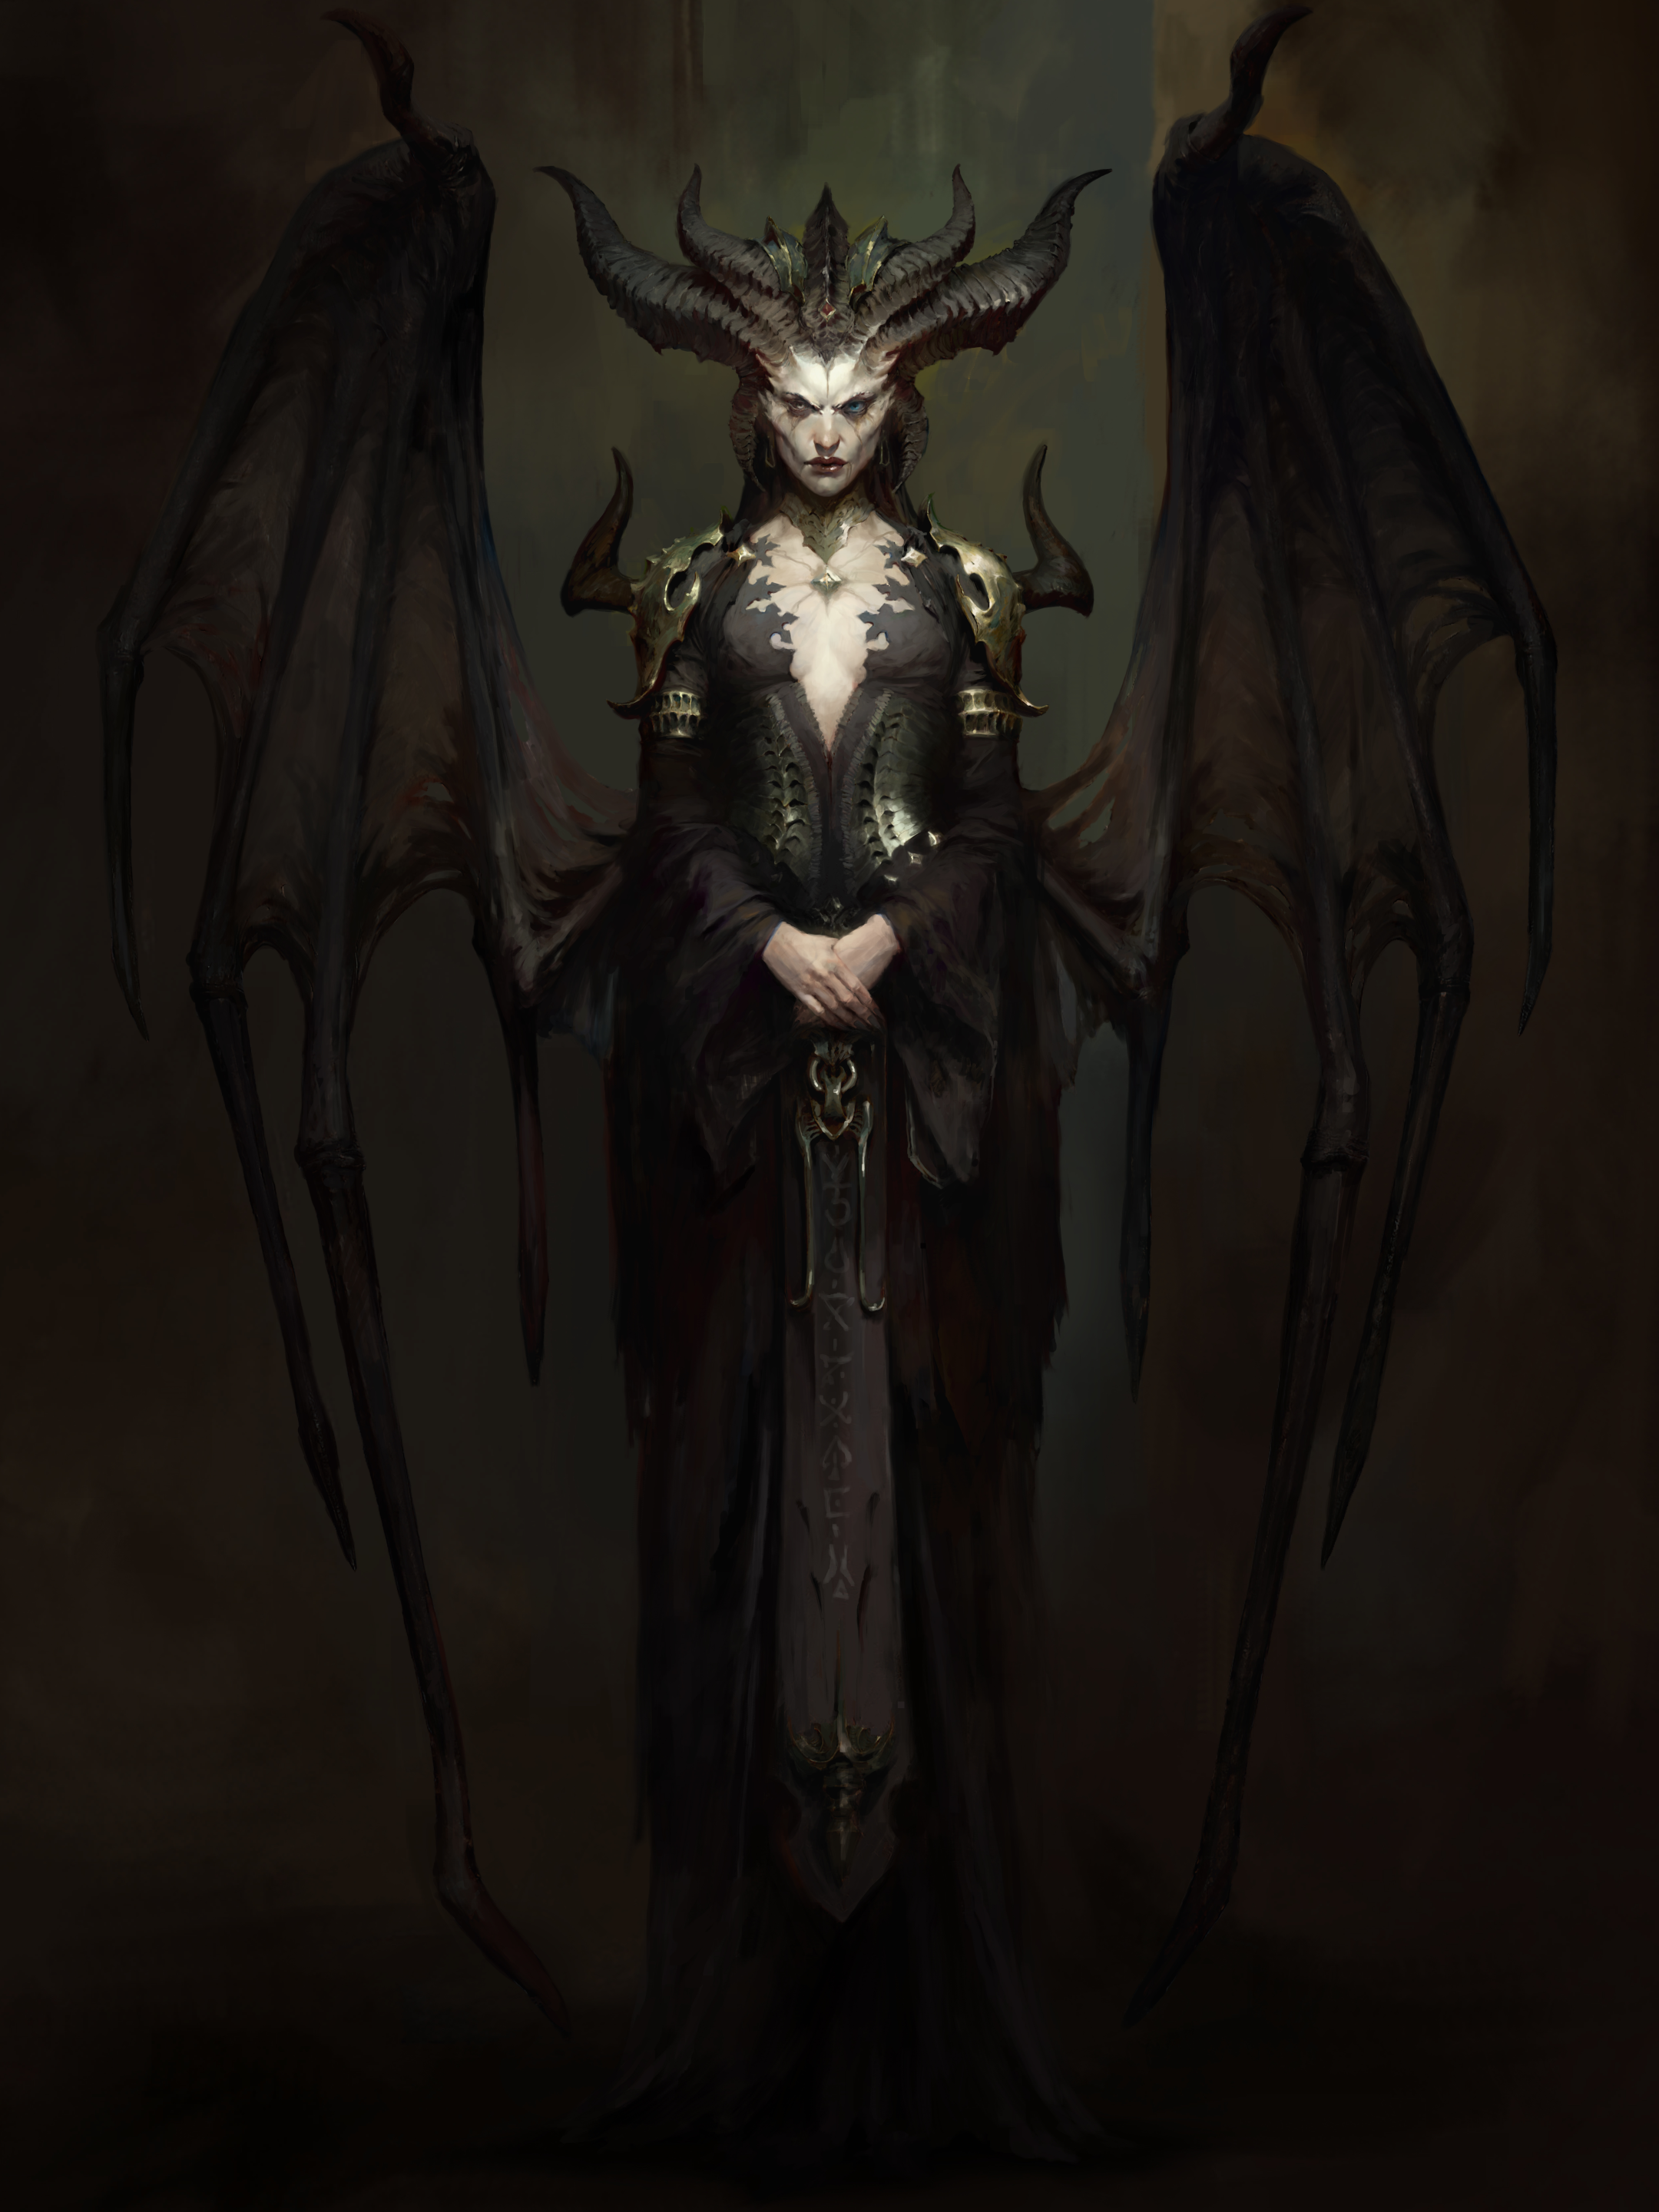 Lilithia Dark - 🎃👻🕸Happy Hallows' Eve my darklings!🕸👻🎃 I